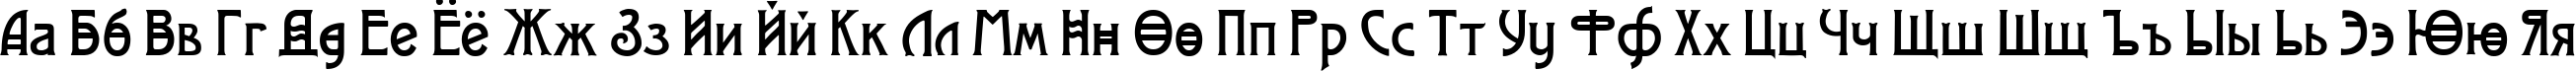 Пример написания русского алфавита шрифтом Modernist Two